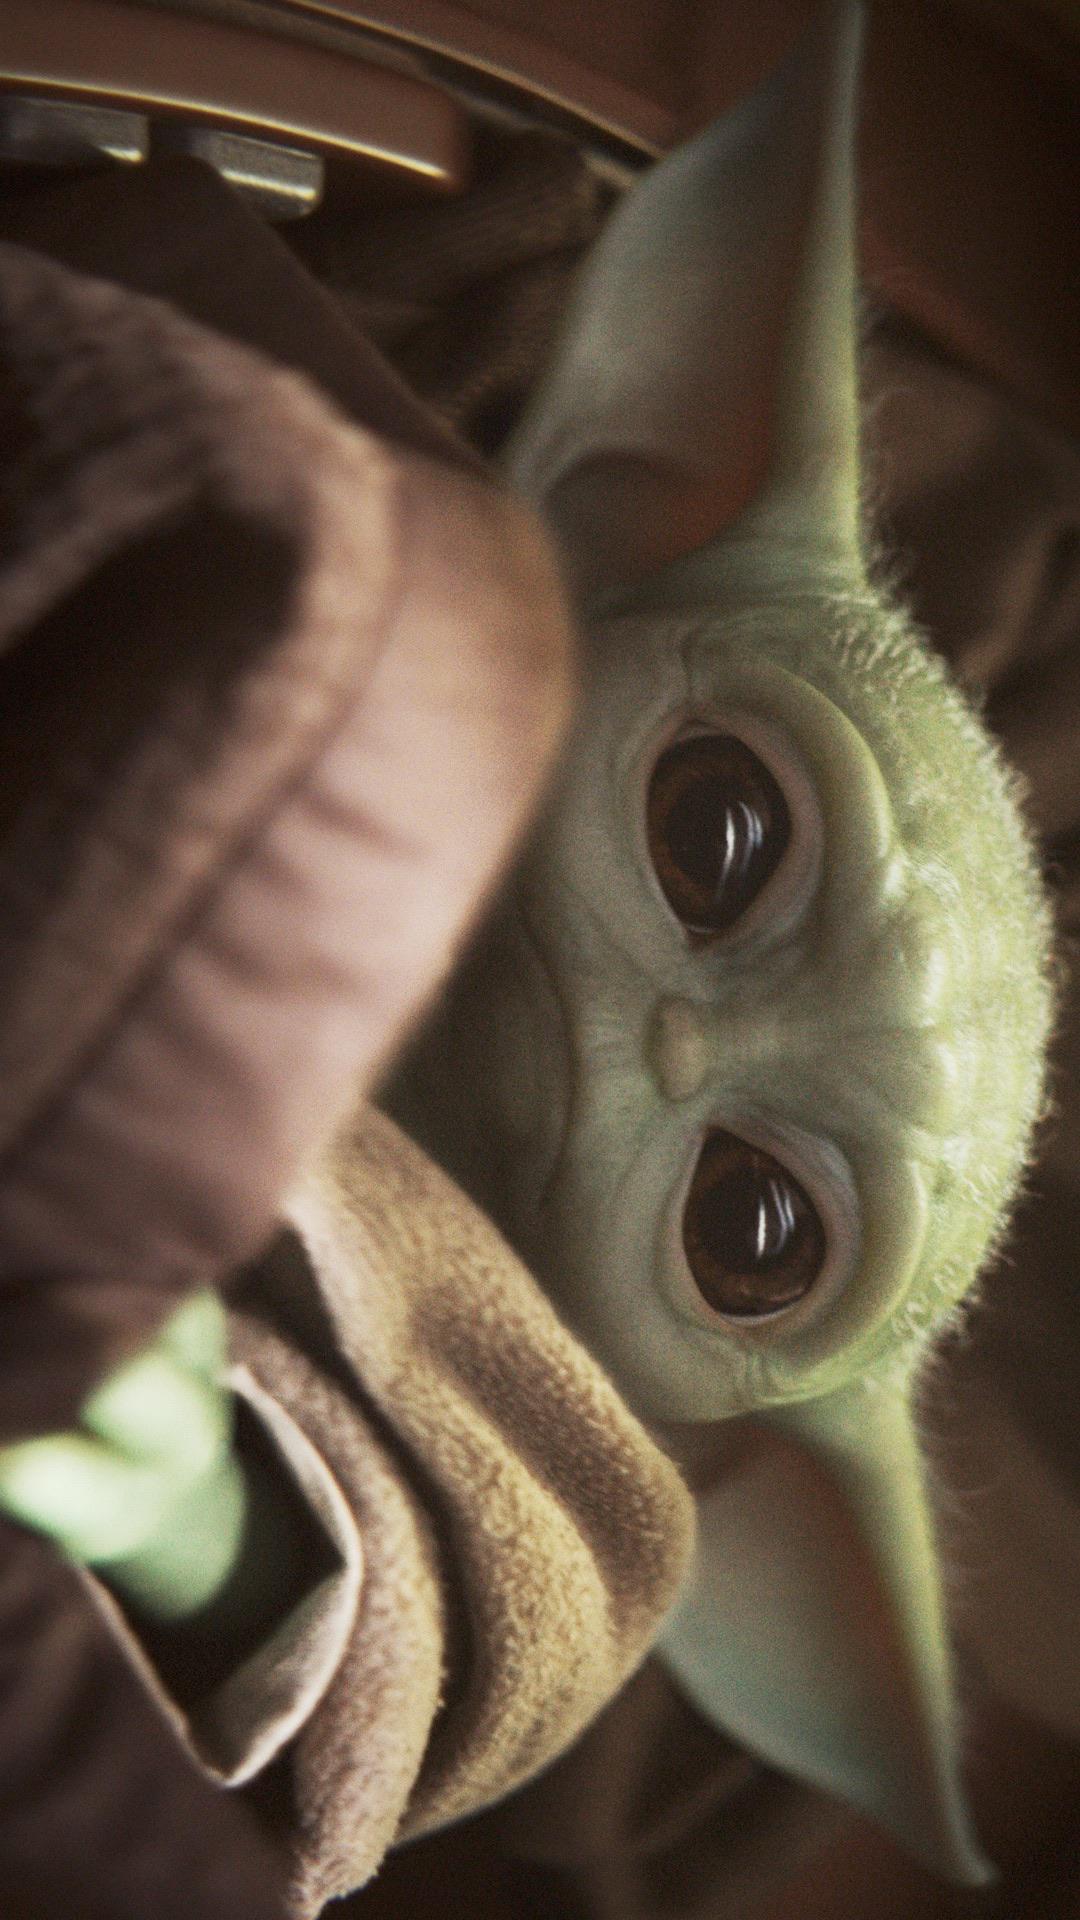 Wad - Baby Yoda From Mandalorian - HD Wallpaper 